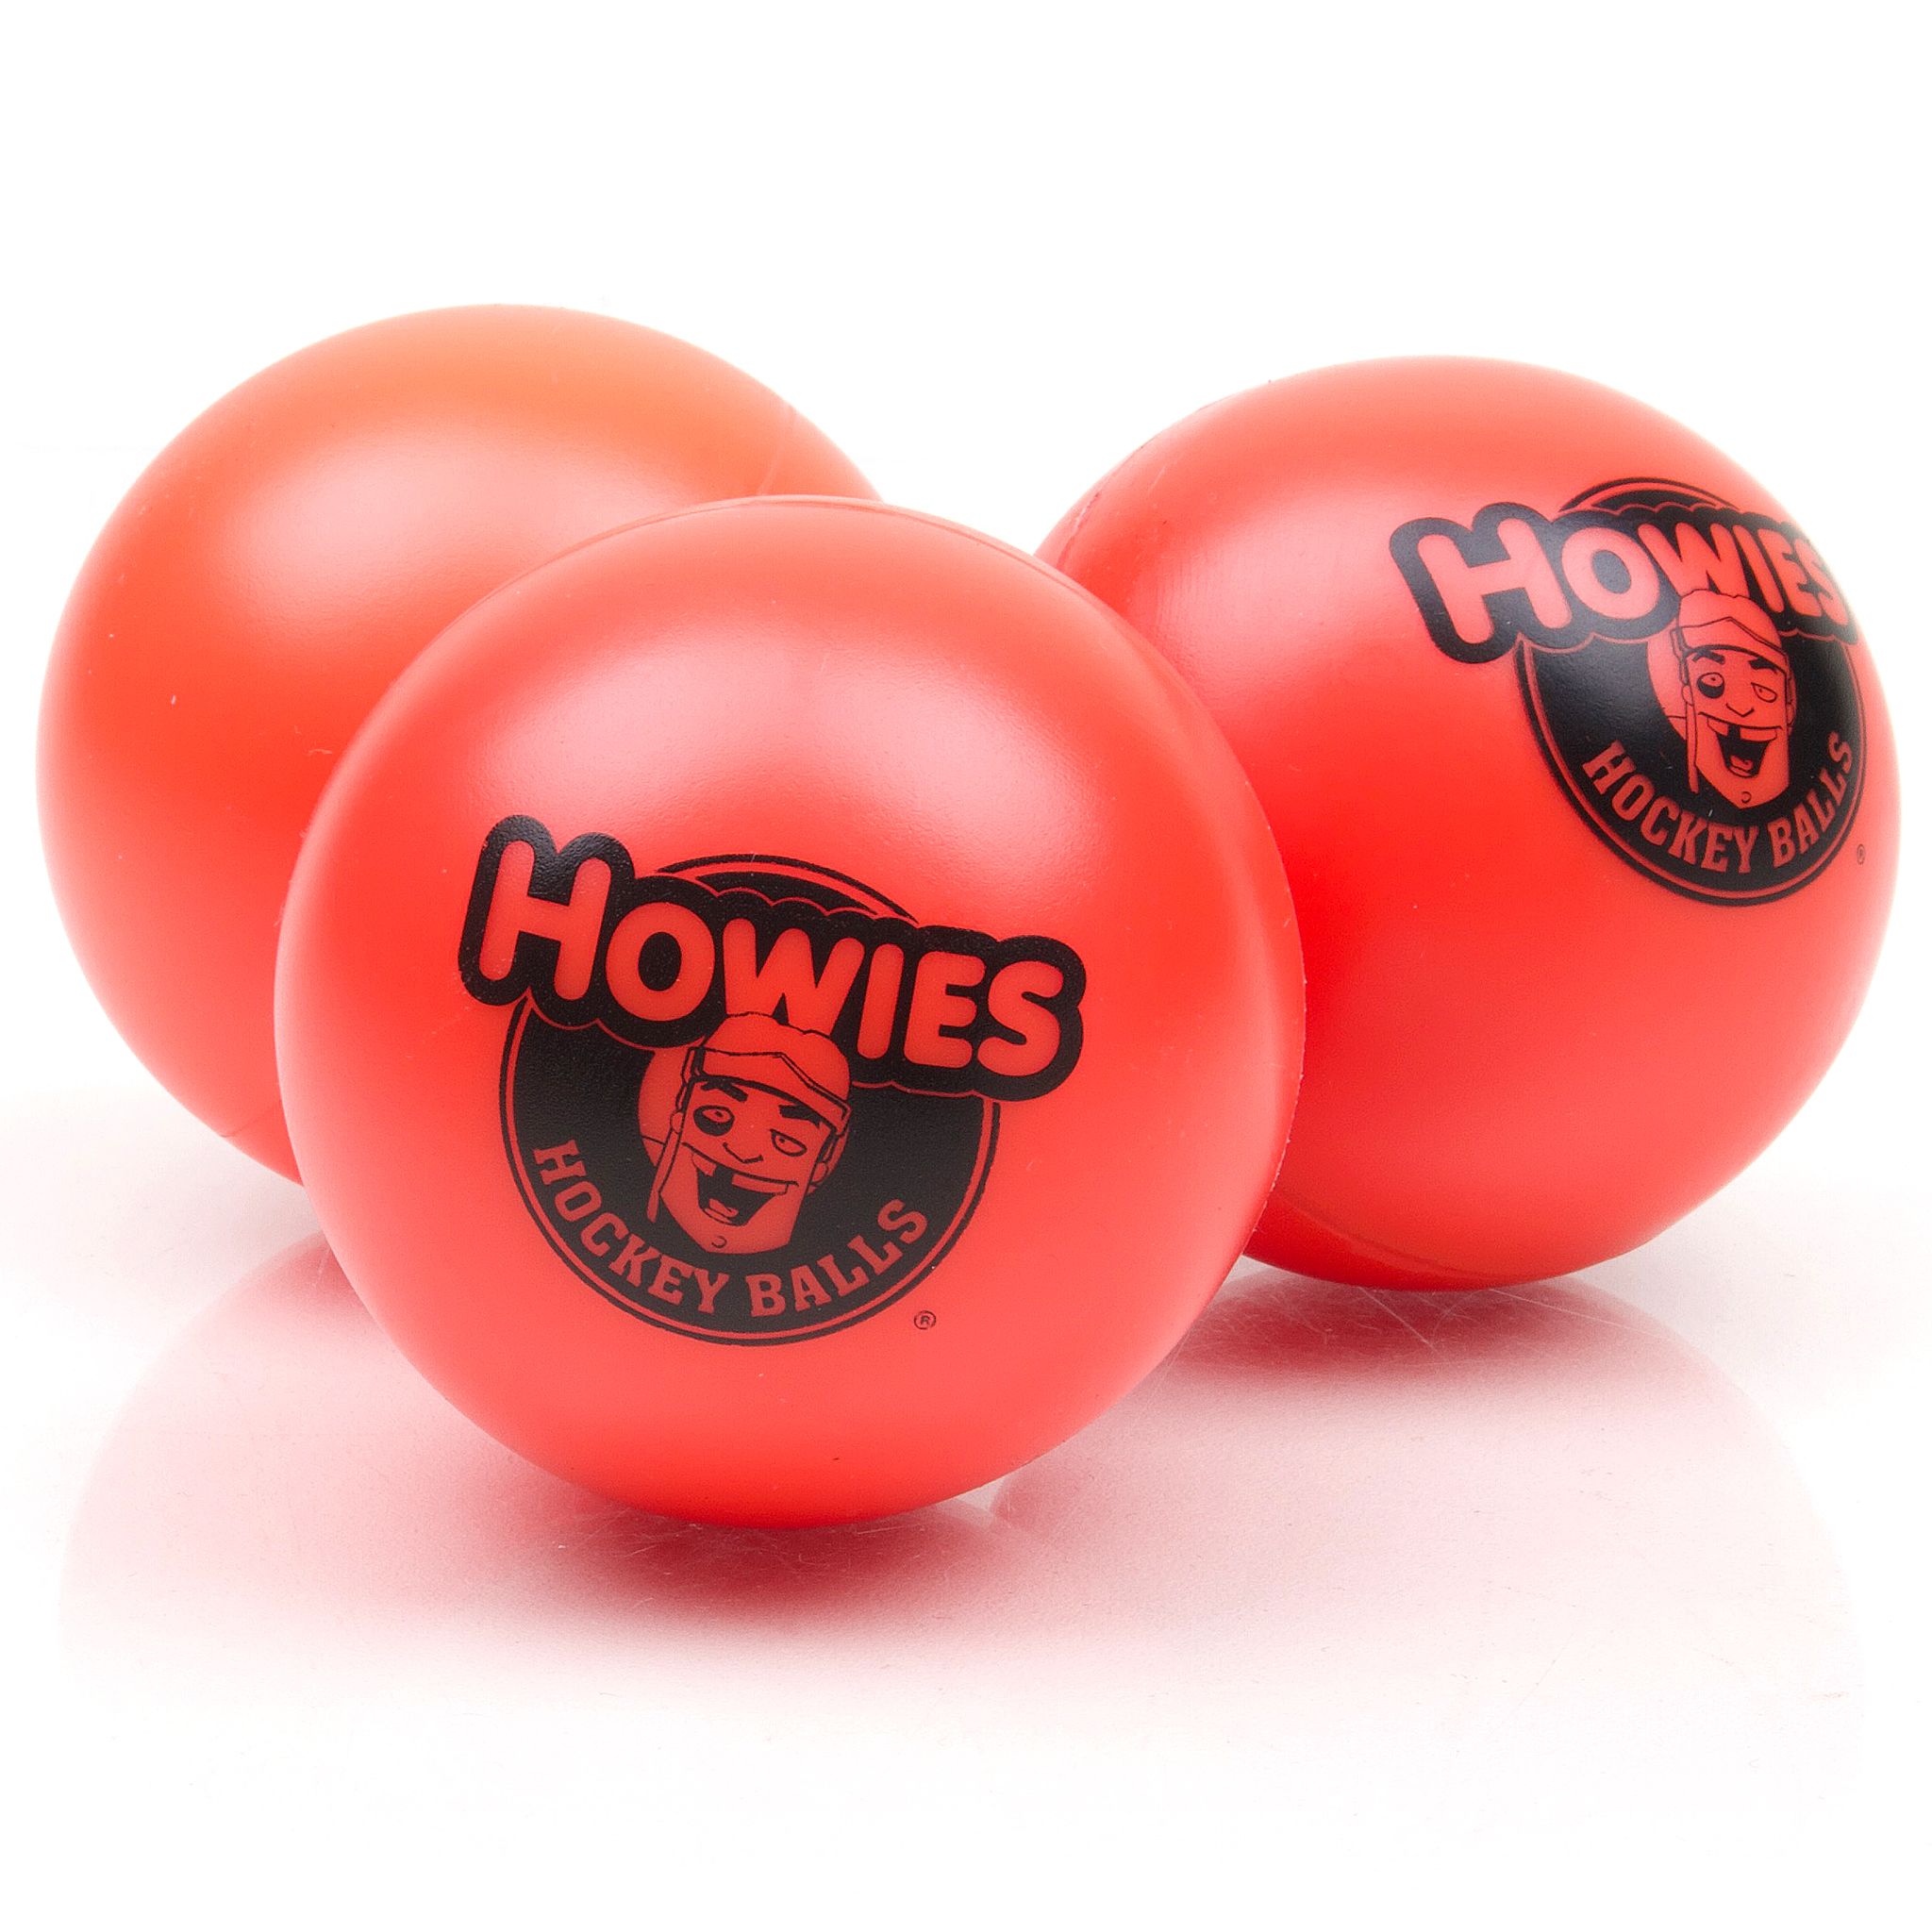 Howies Hockey Balls (25 Pack)